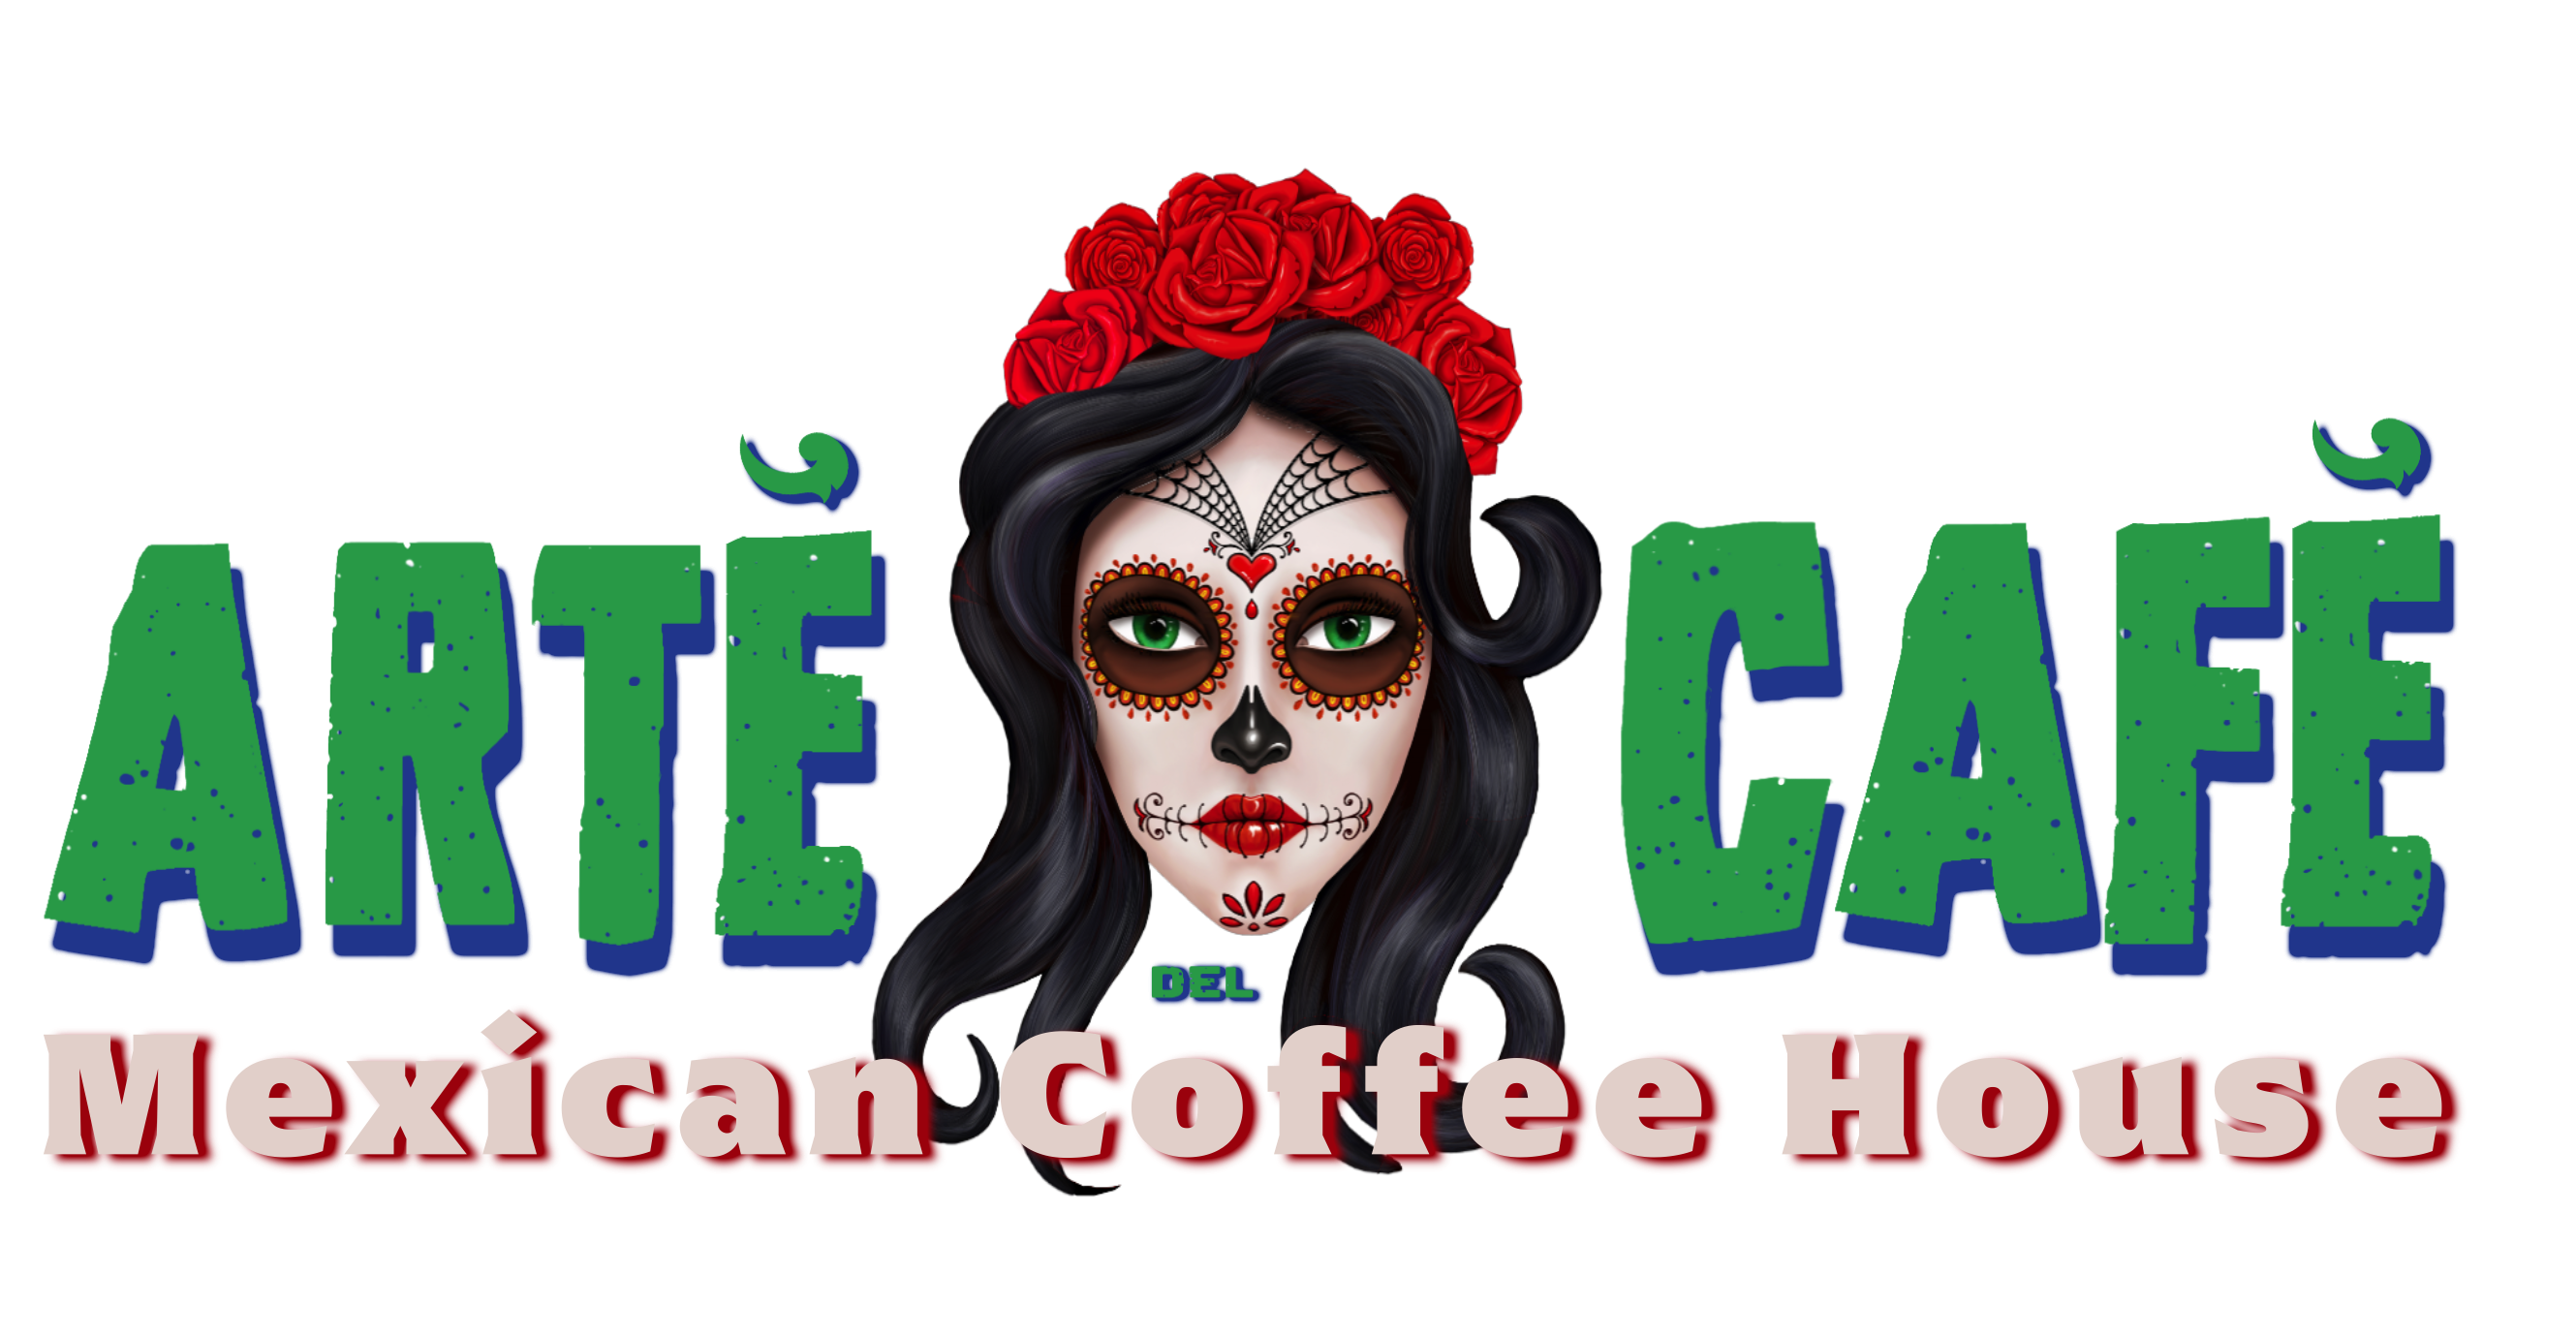 Arté del Café logo Mexican Coffee House in Stockton, CA with Catrina